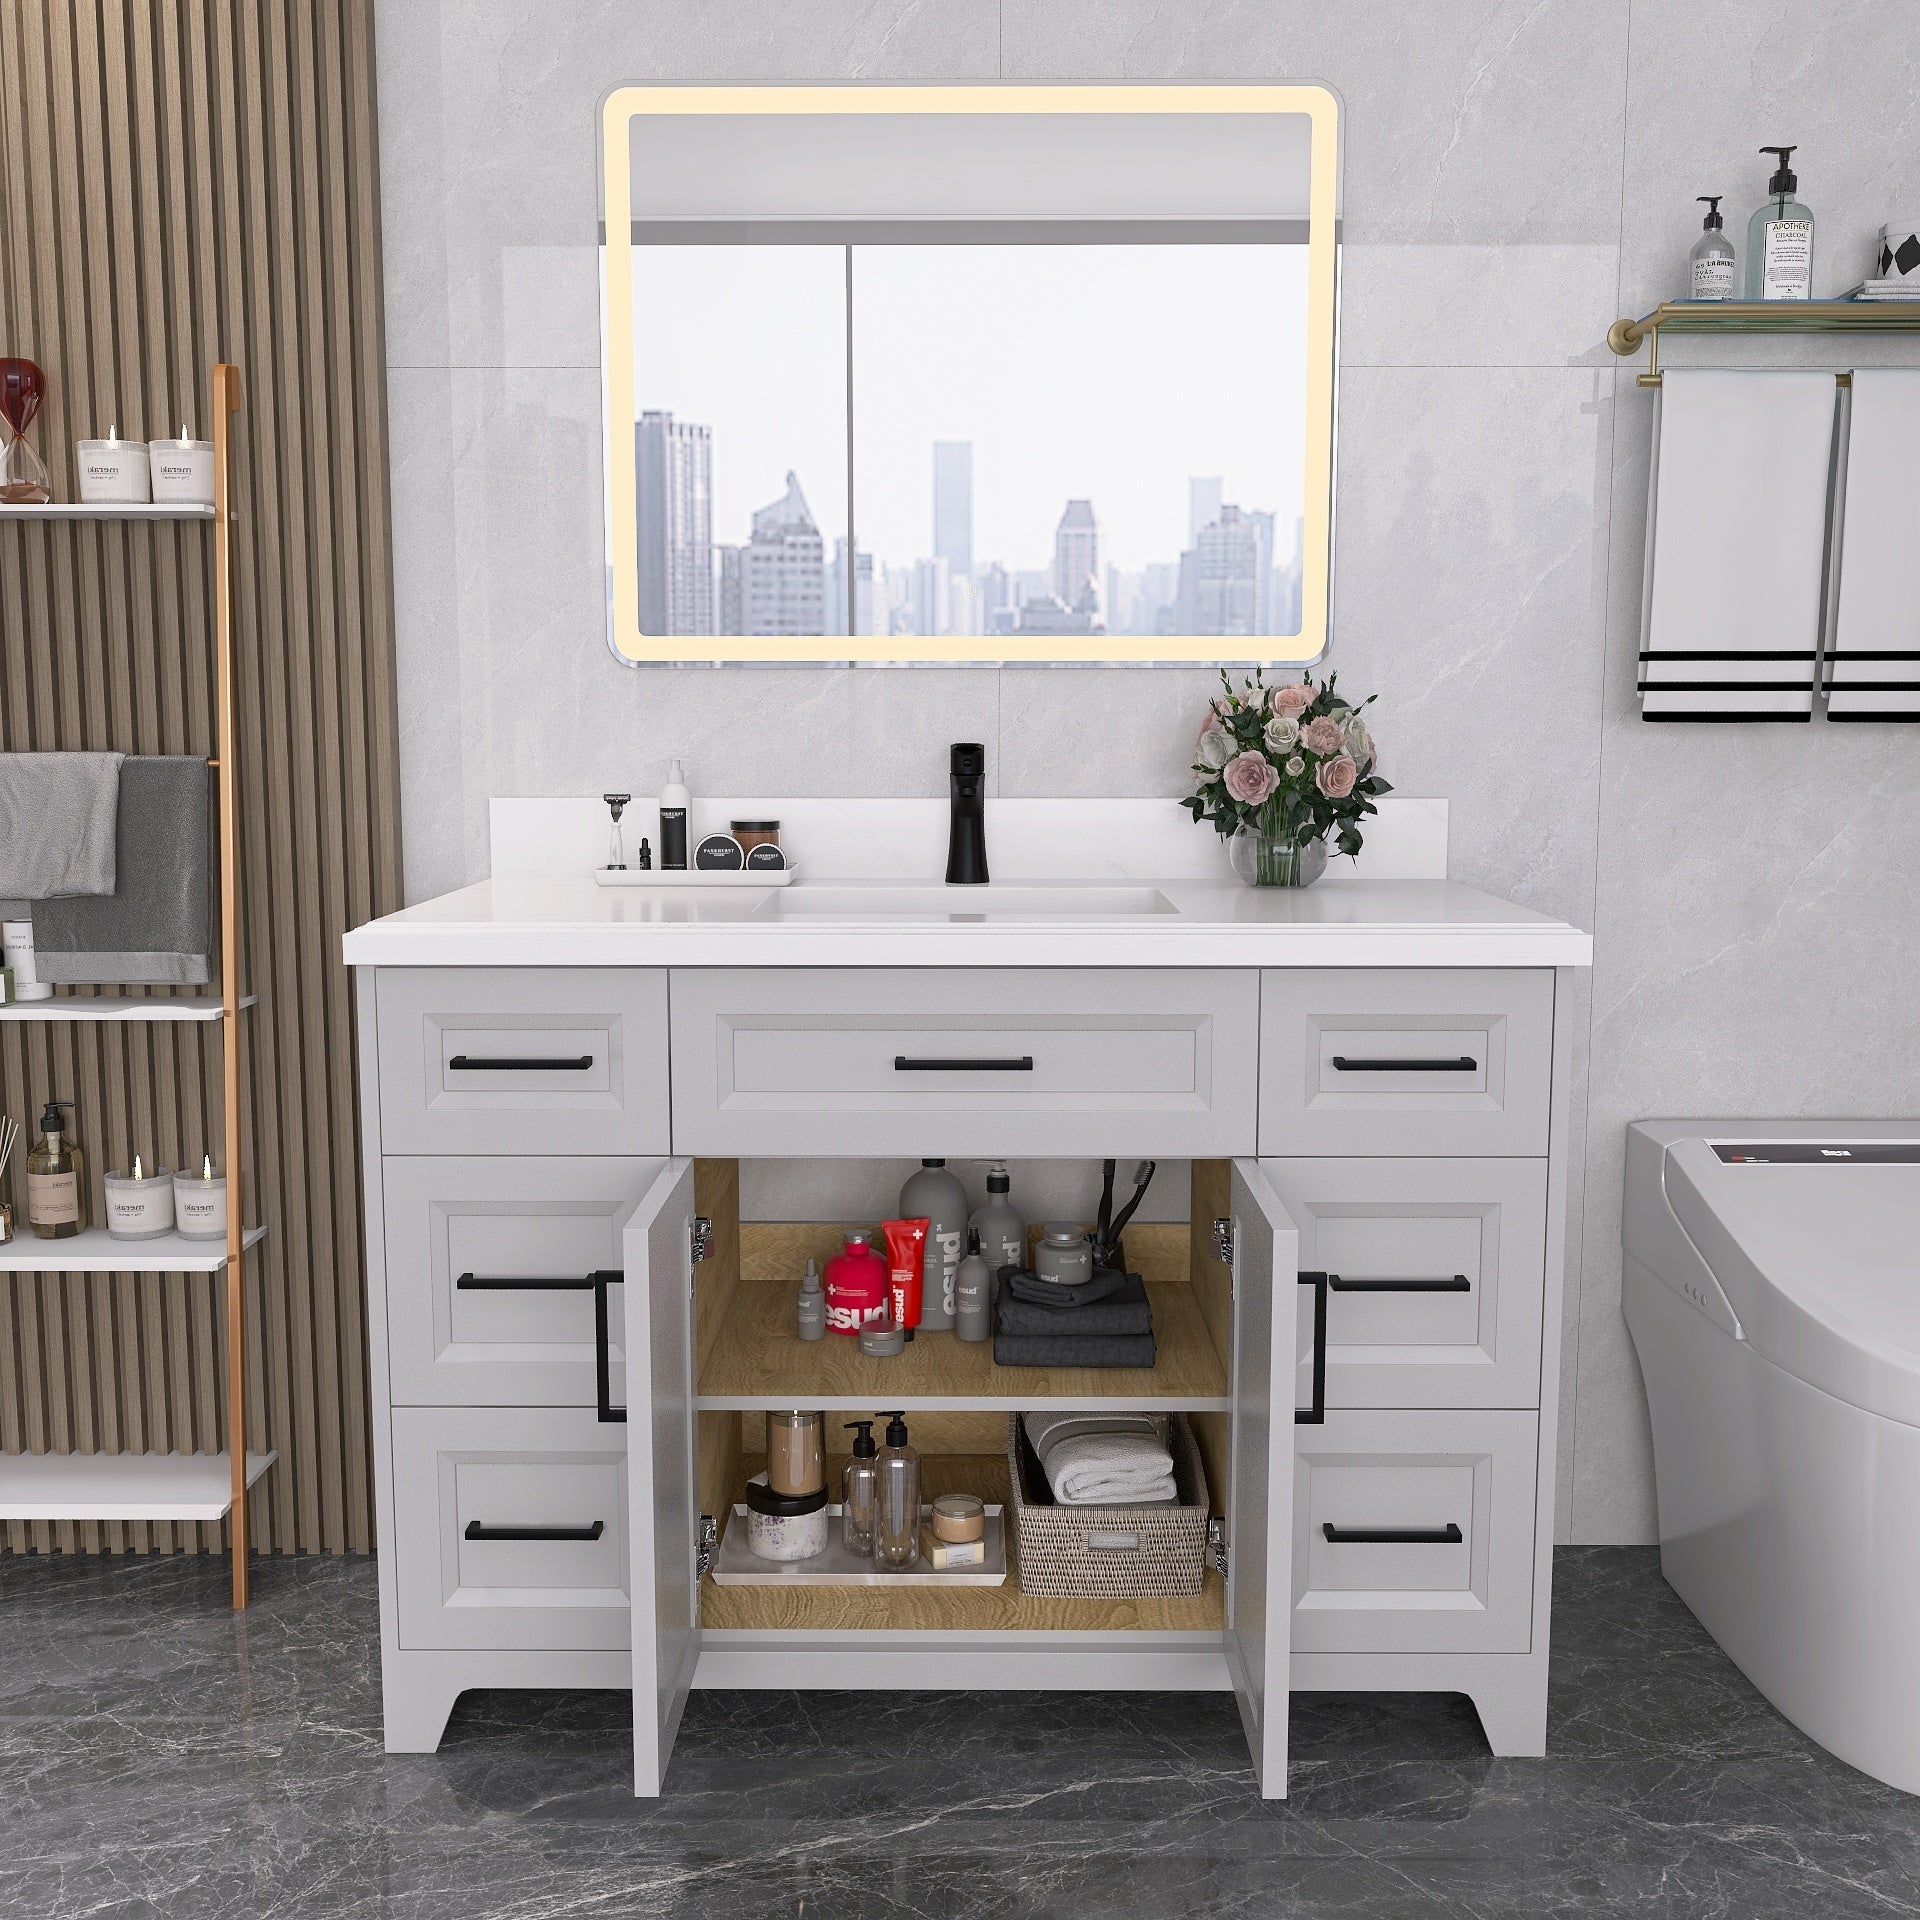 48" Bathroom Vanity With Sink Combo, Modern